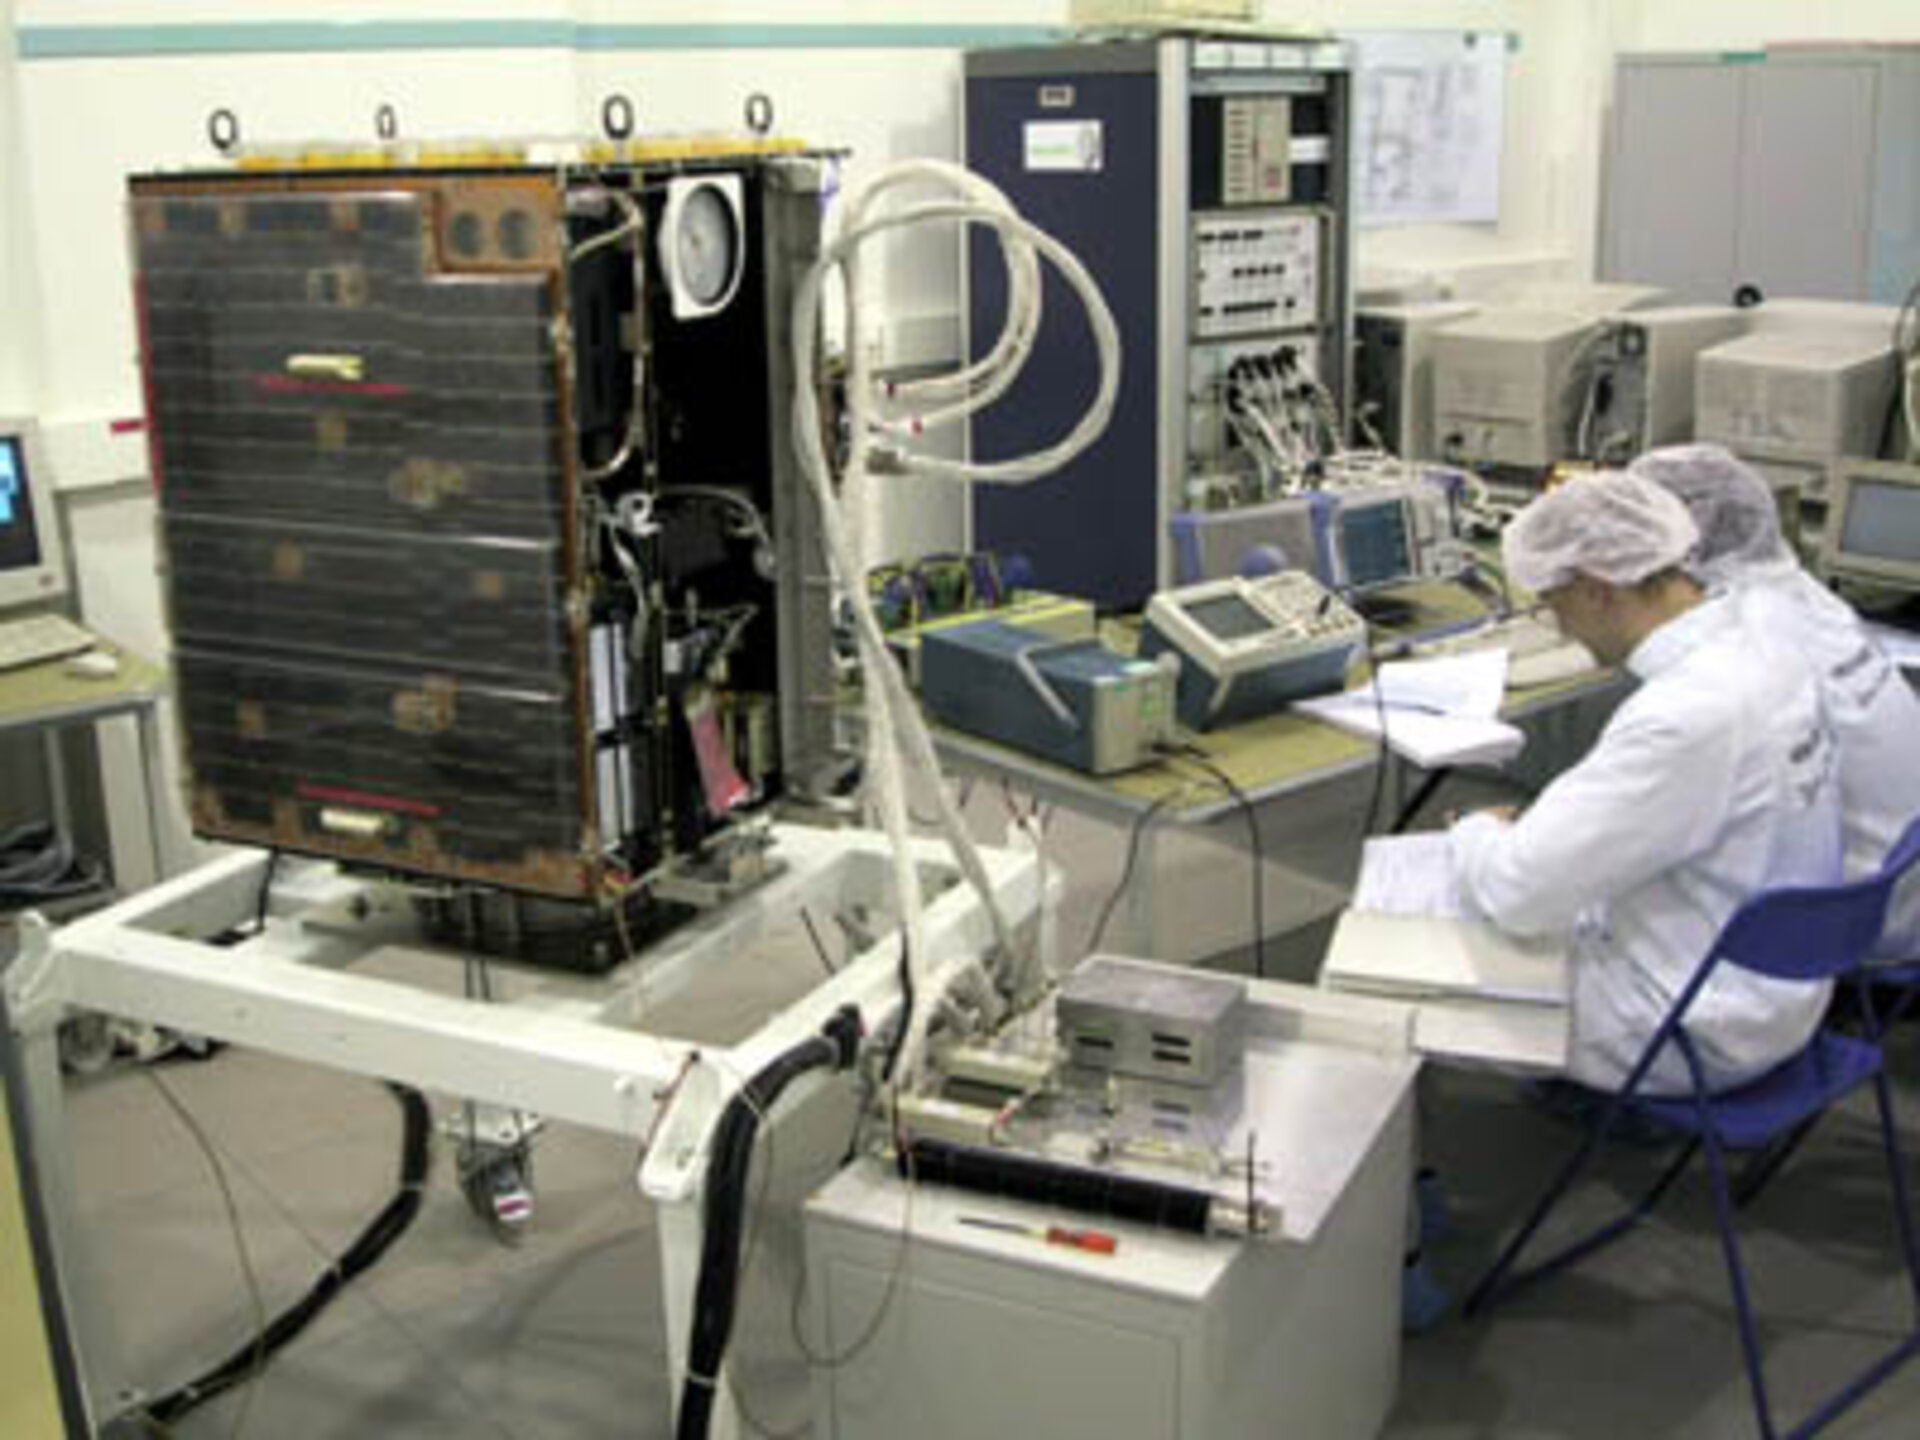 Proba spacecraft testing at Verhaert